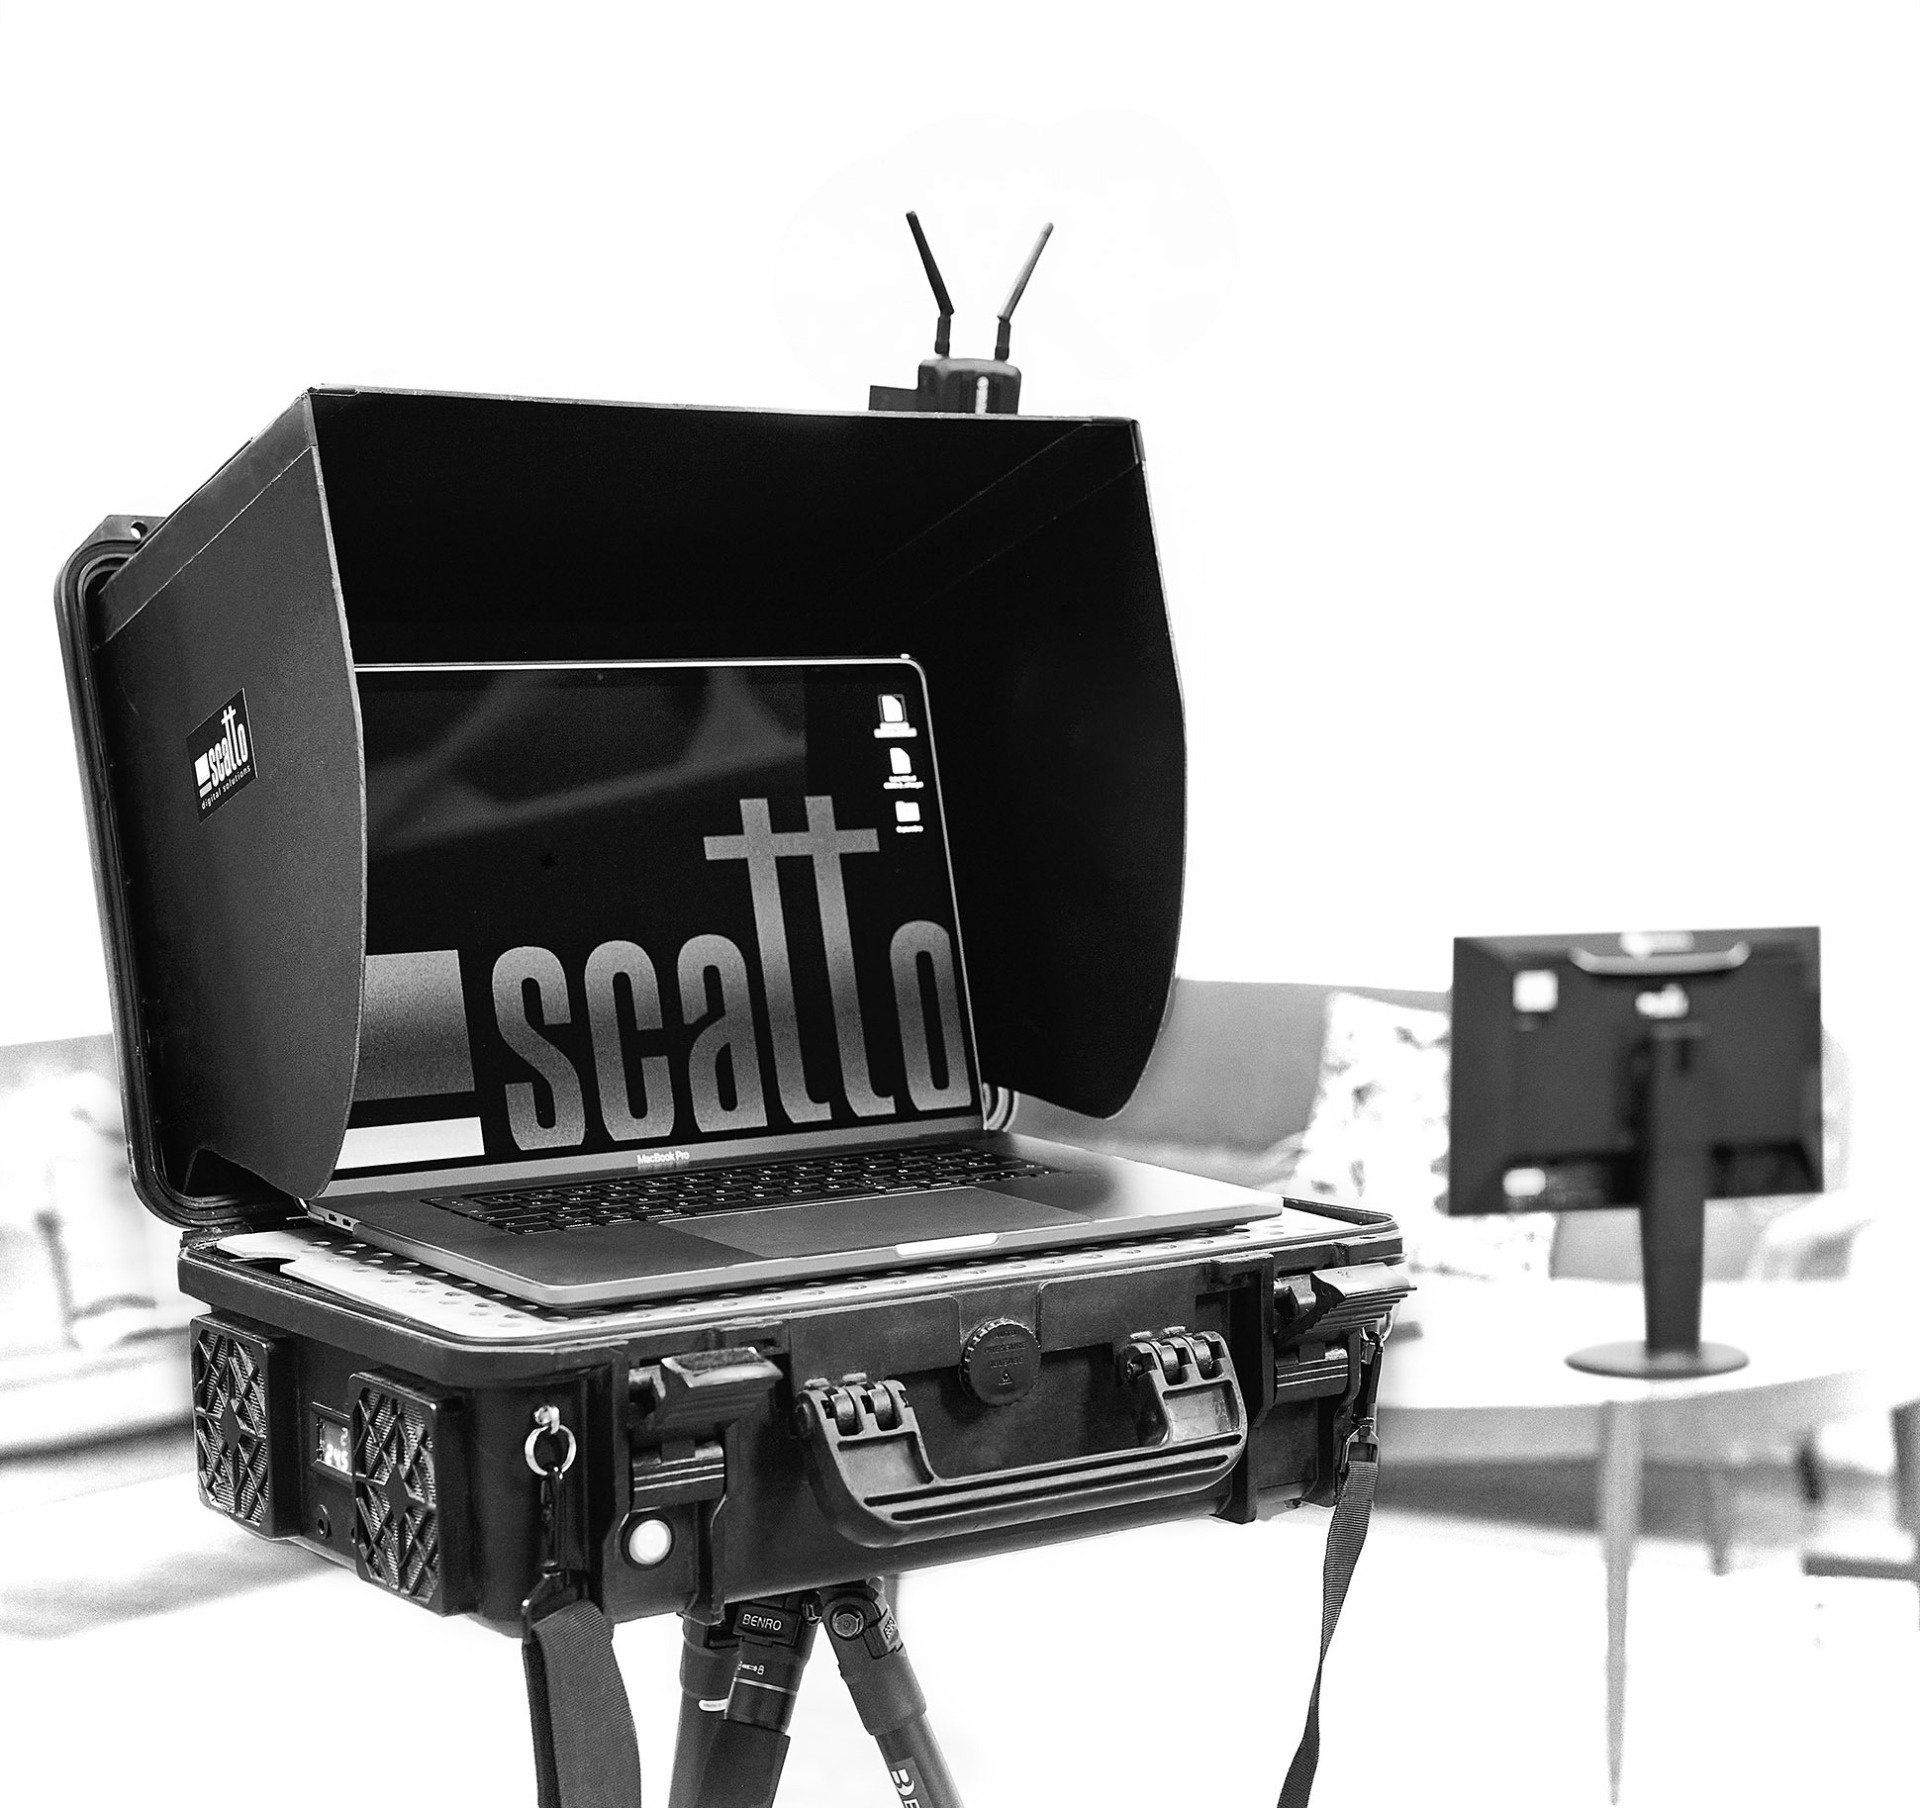 Scatto Digital Solutions-estacion digital-fan cooled-rack-connectivity-tecnico digital fotografia-alquiler equipo digital para fotografia-Madrid-Spain